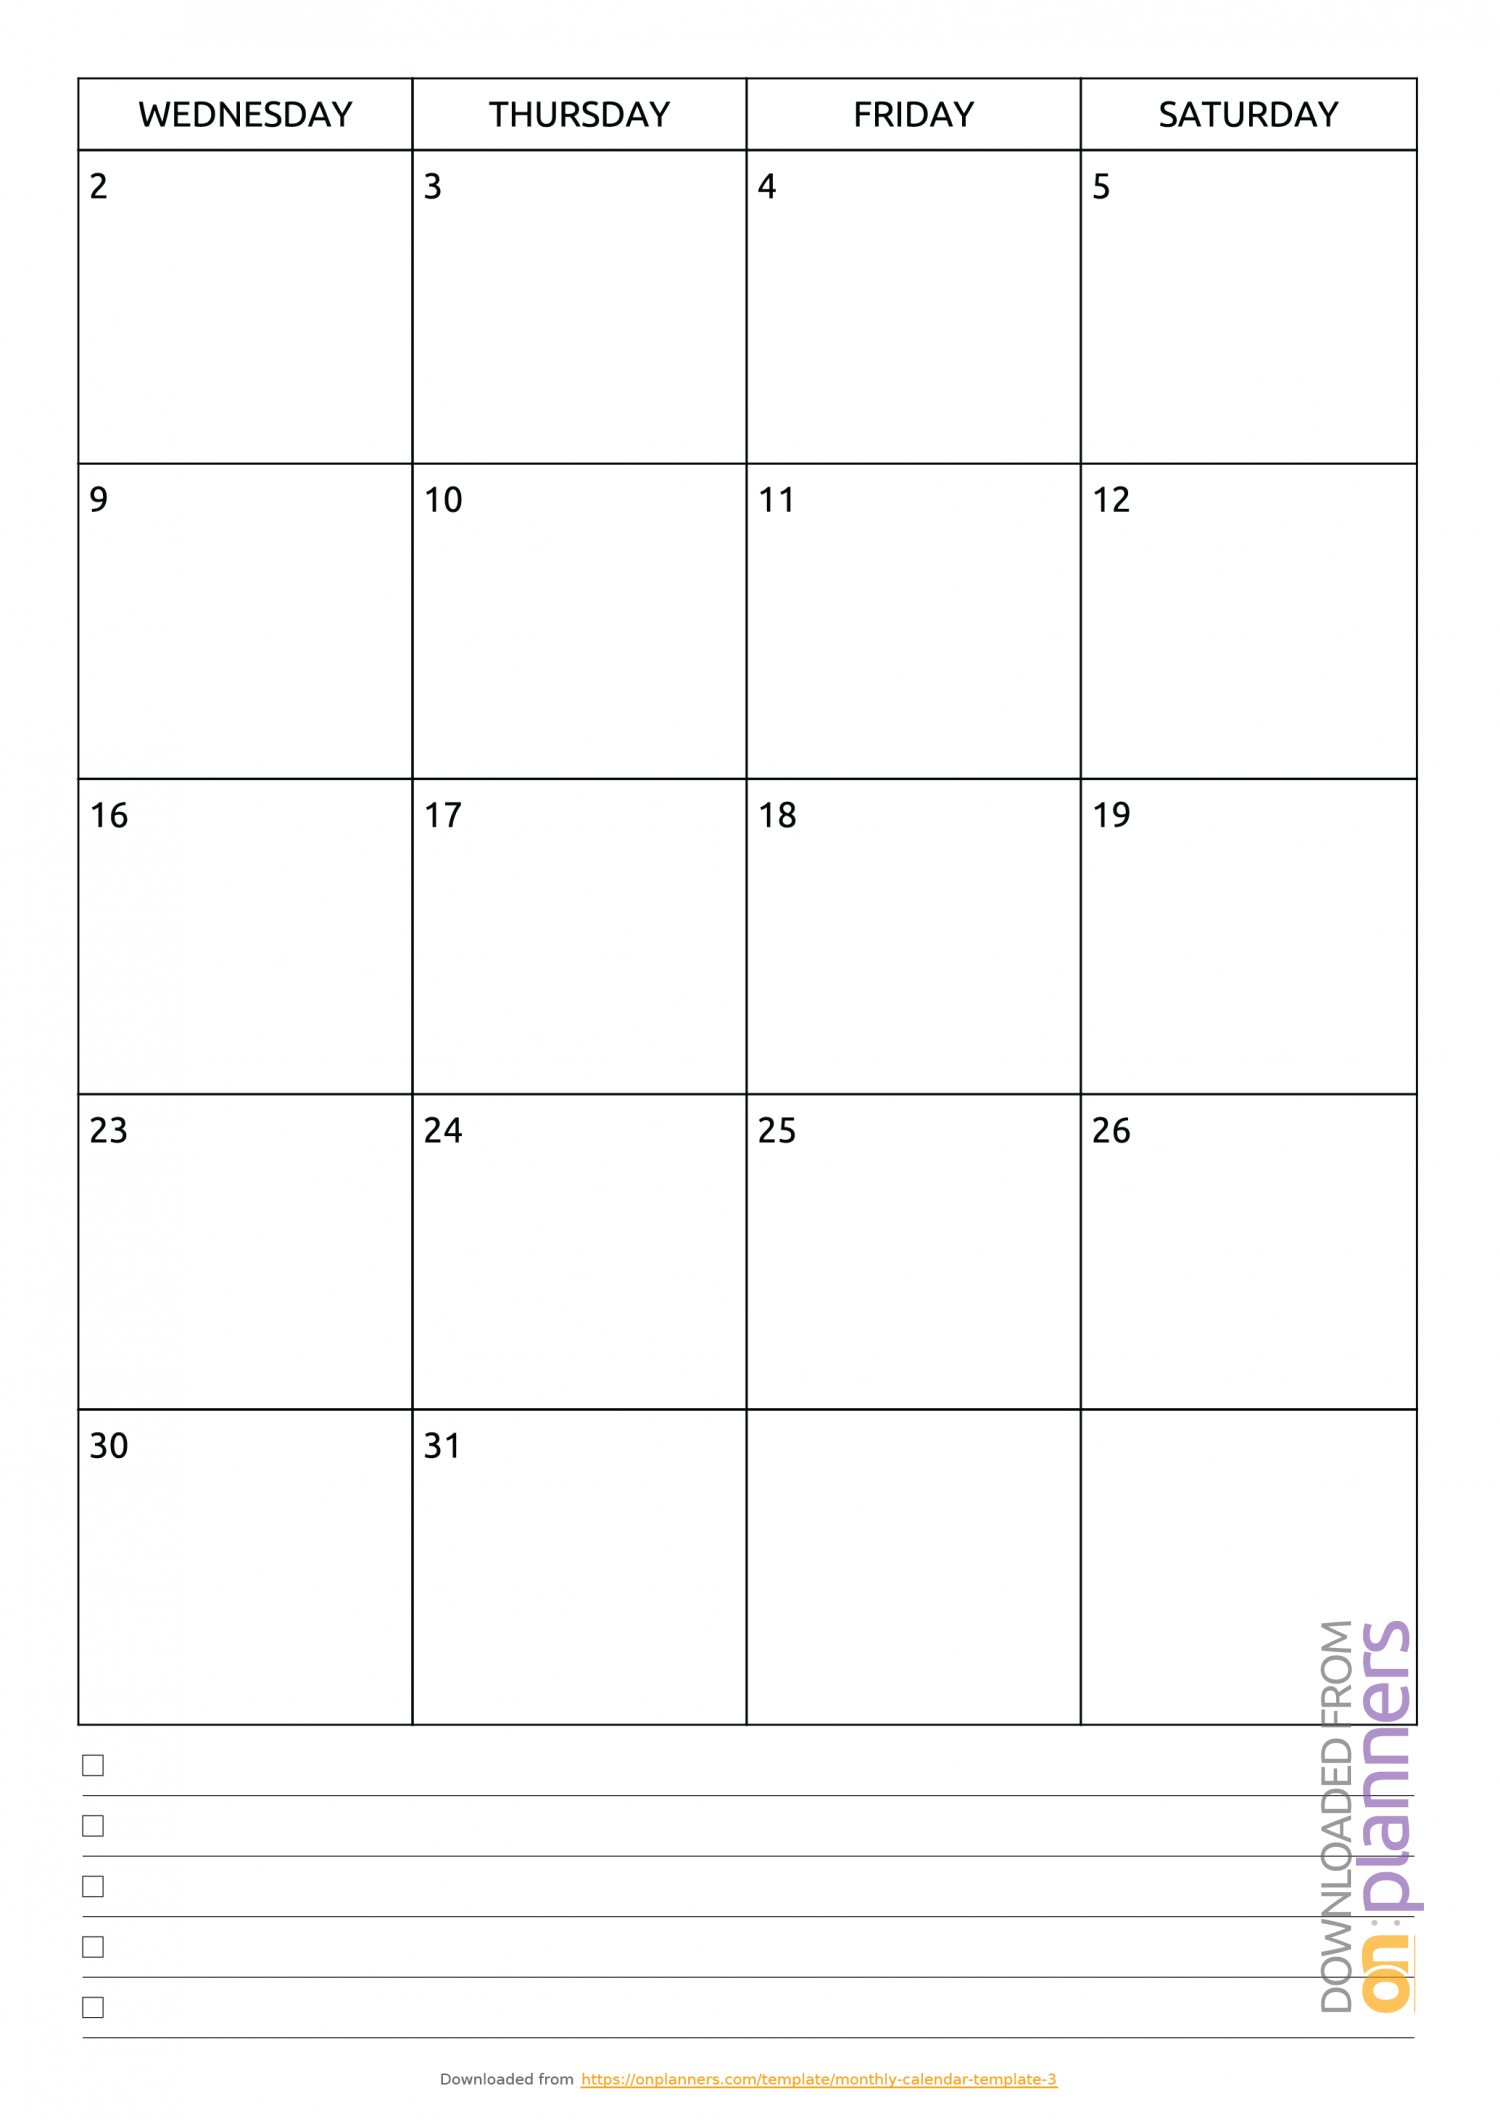 8X 10 Monthly Calaendar Printable Example Calendar Printable